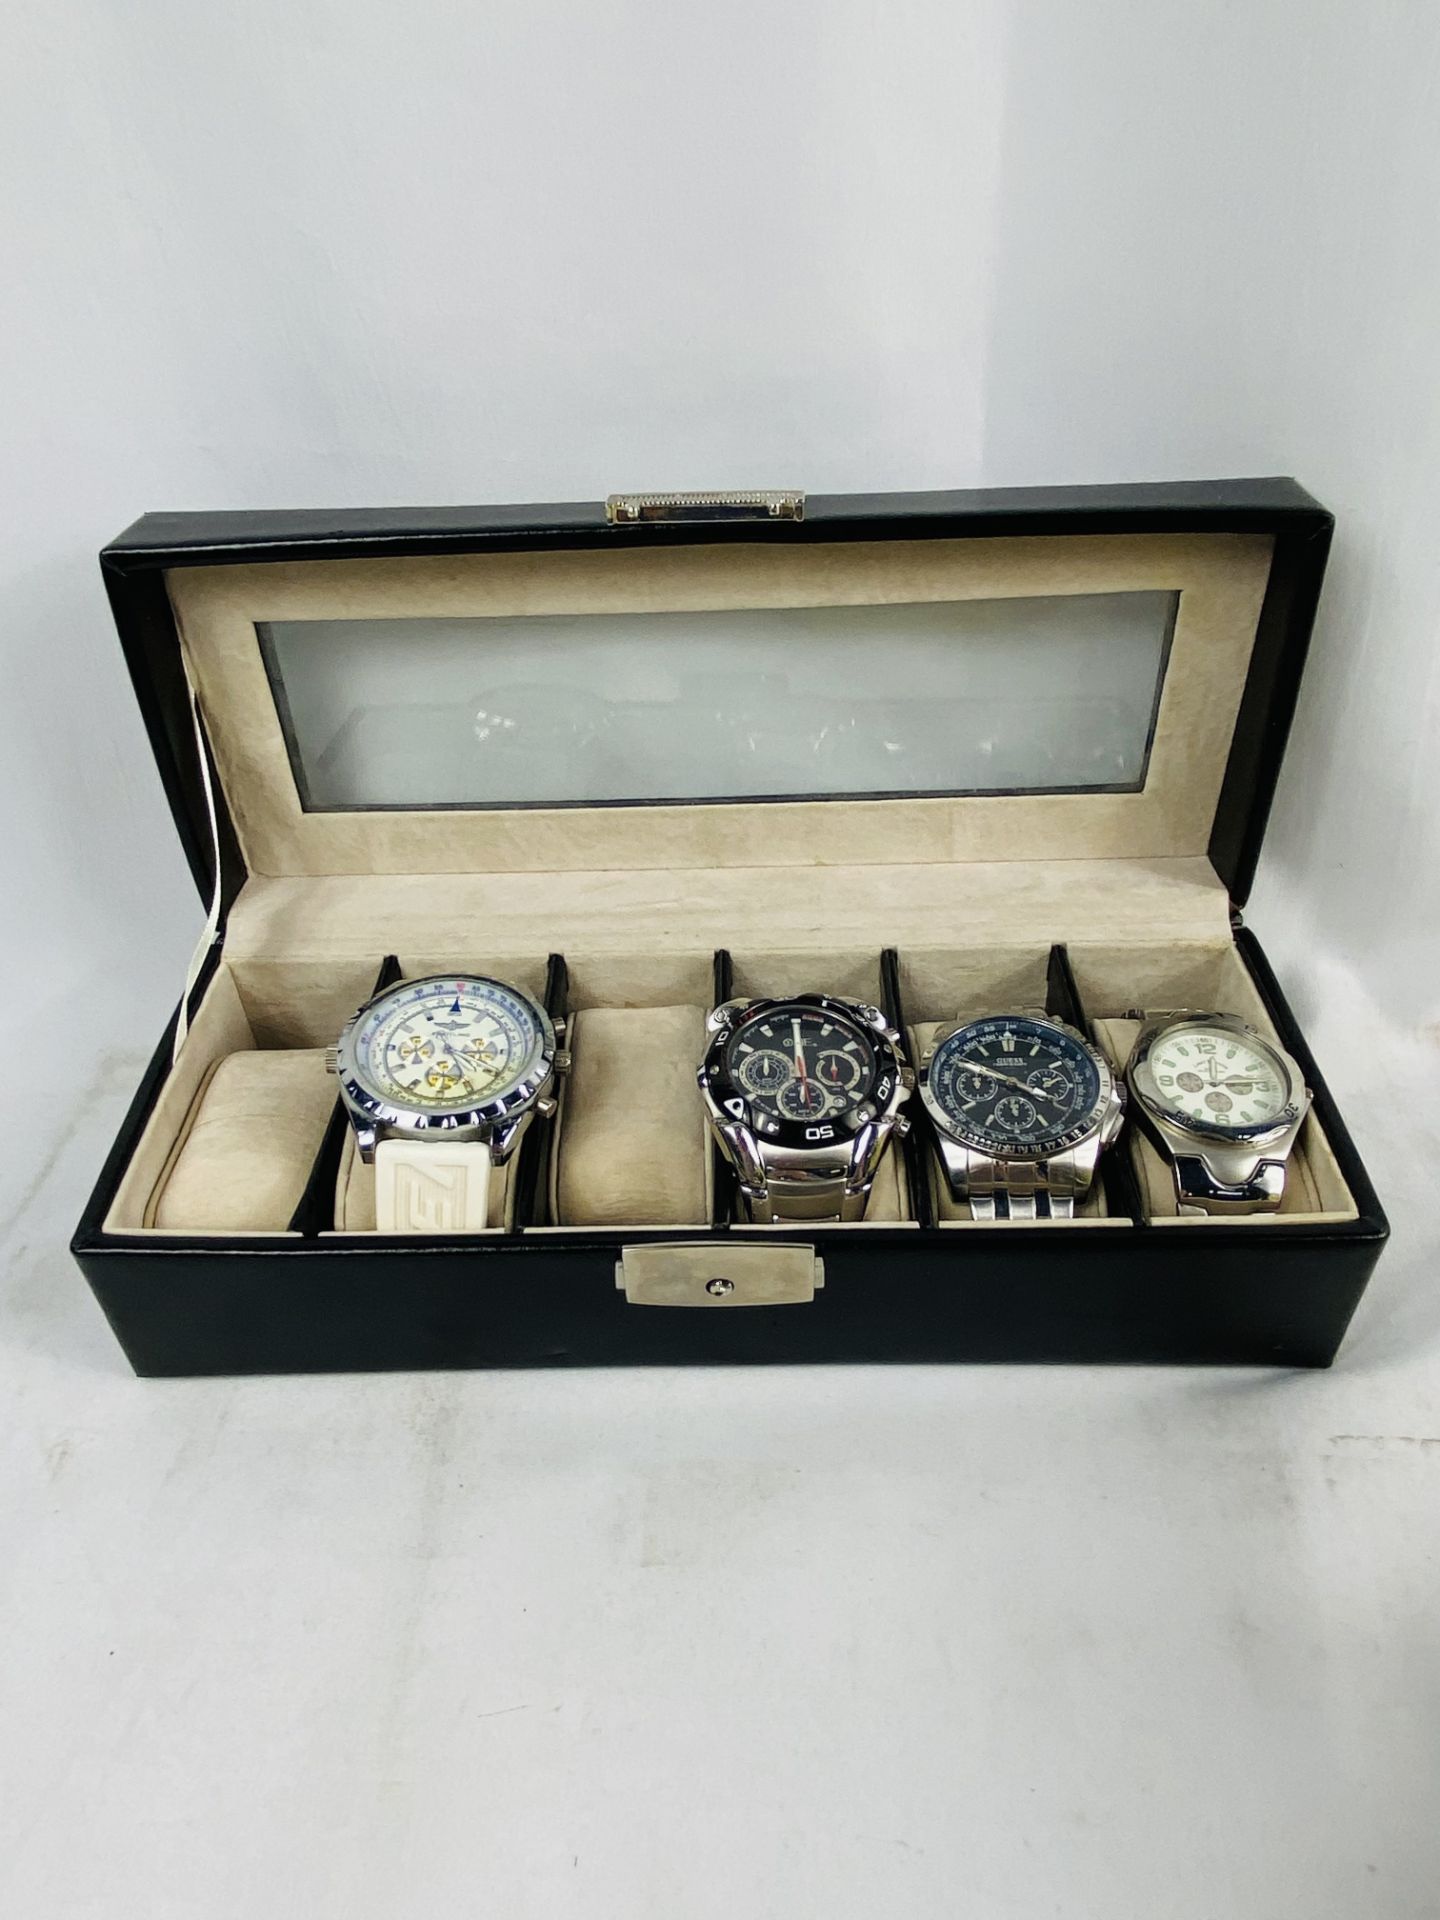 Casio G Shock watch together with six other watches - Bild 2 aus 6